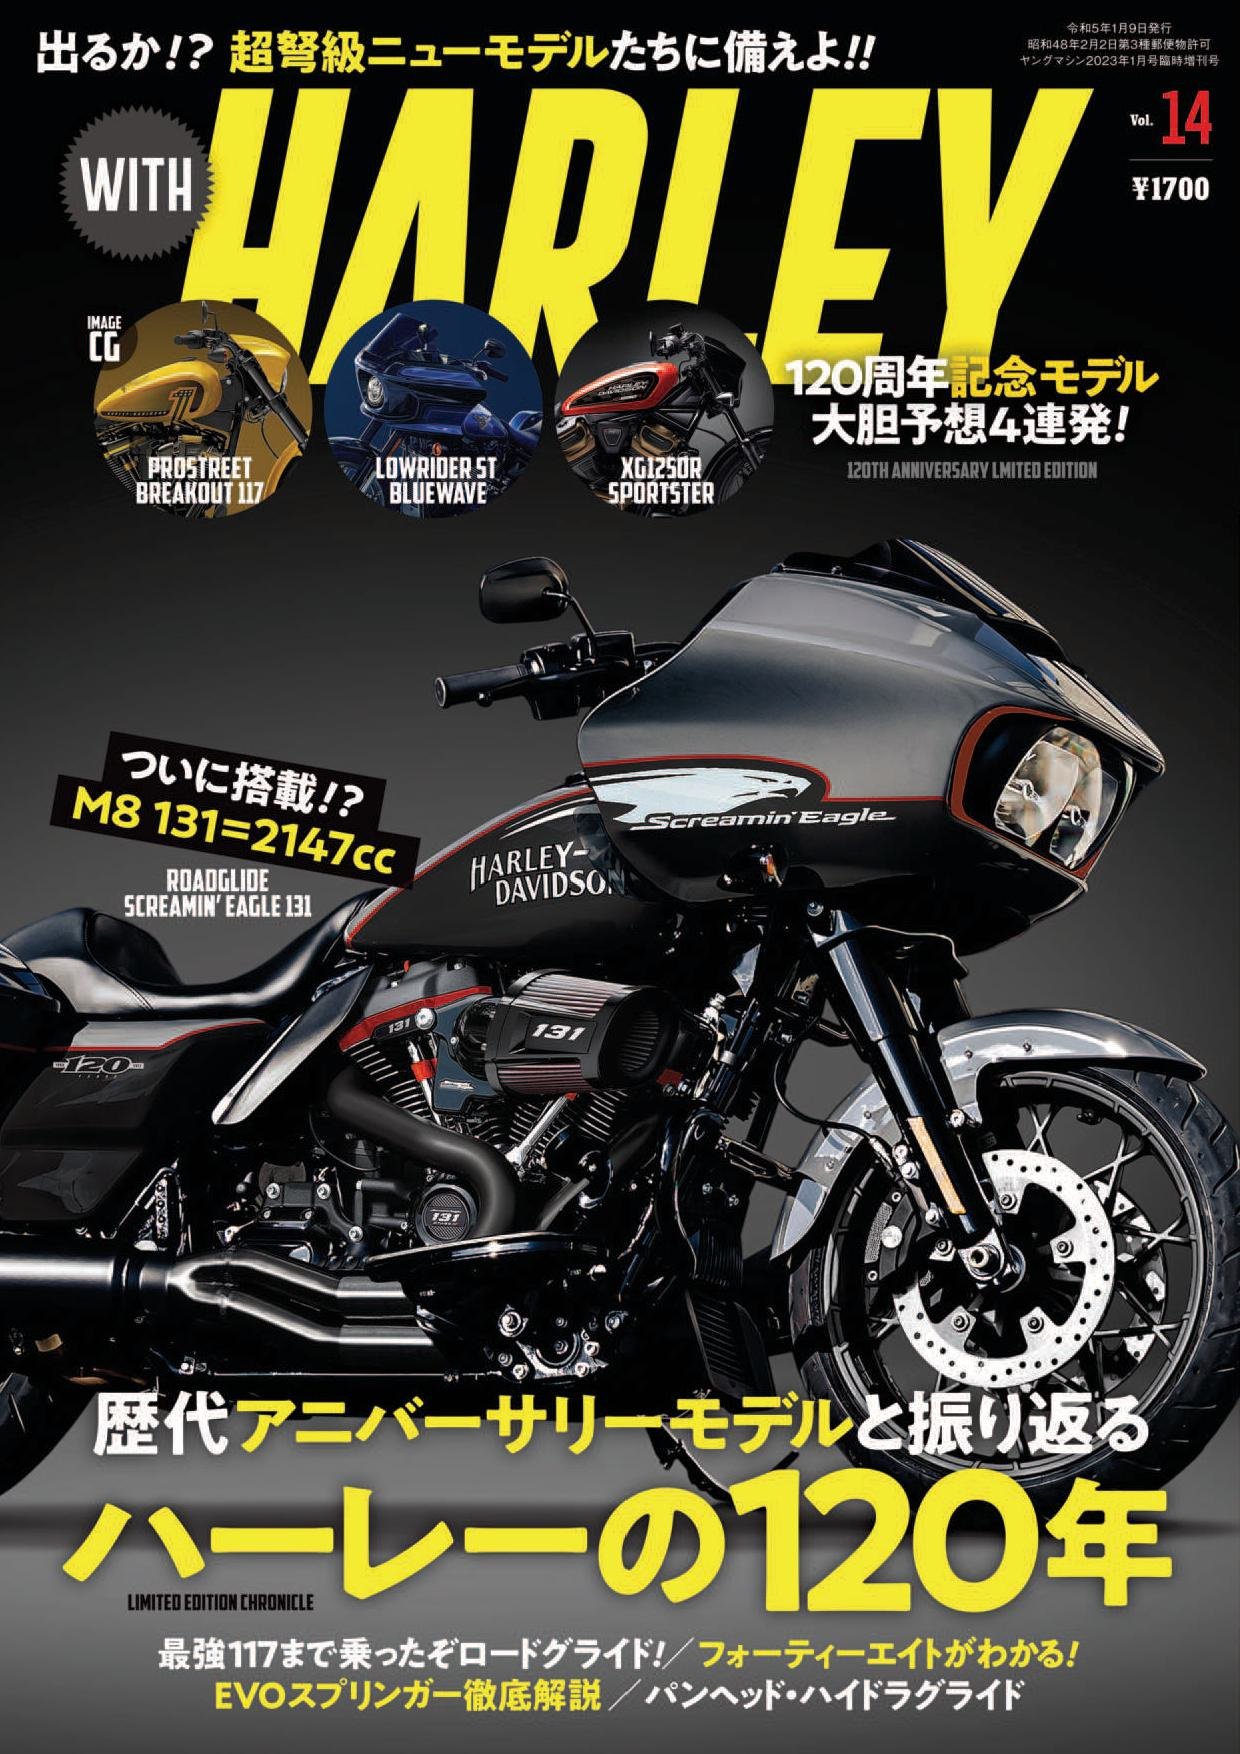 Motorcyclist・YONGMACHINE 2冊セット - アクセサリー